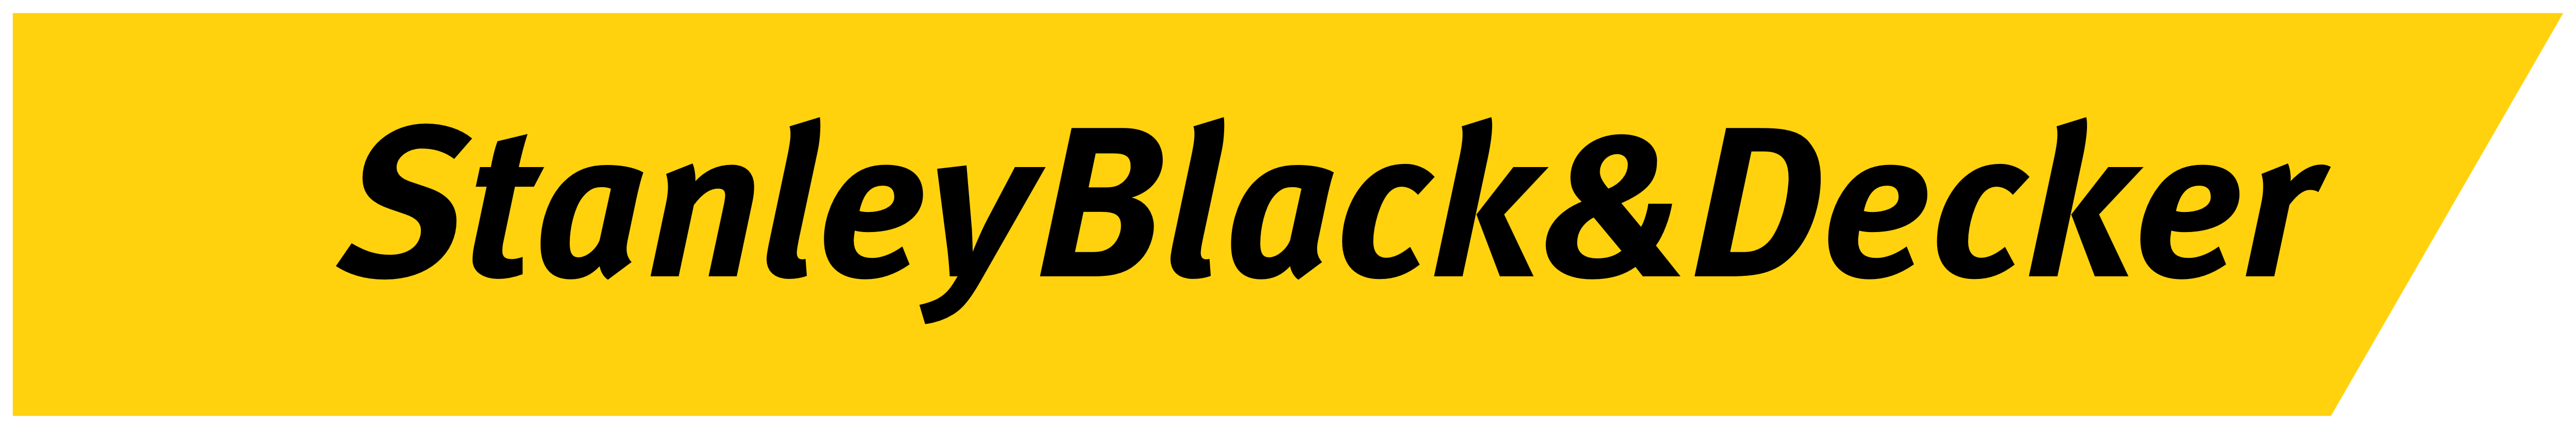 Stanley Black & Decker Logos Download